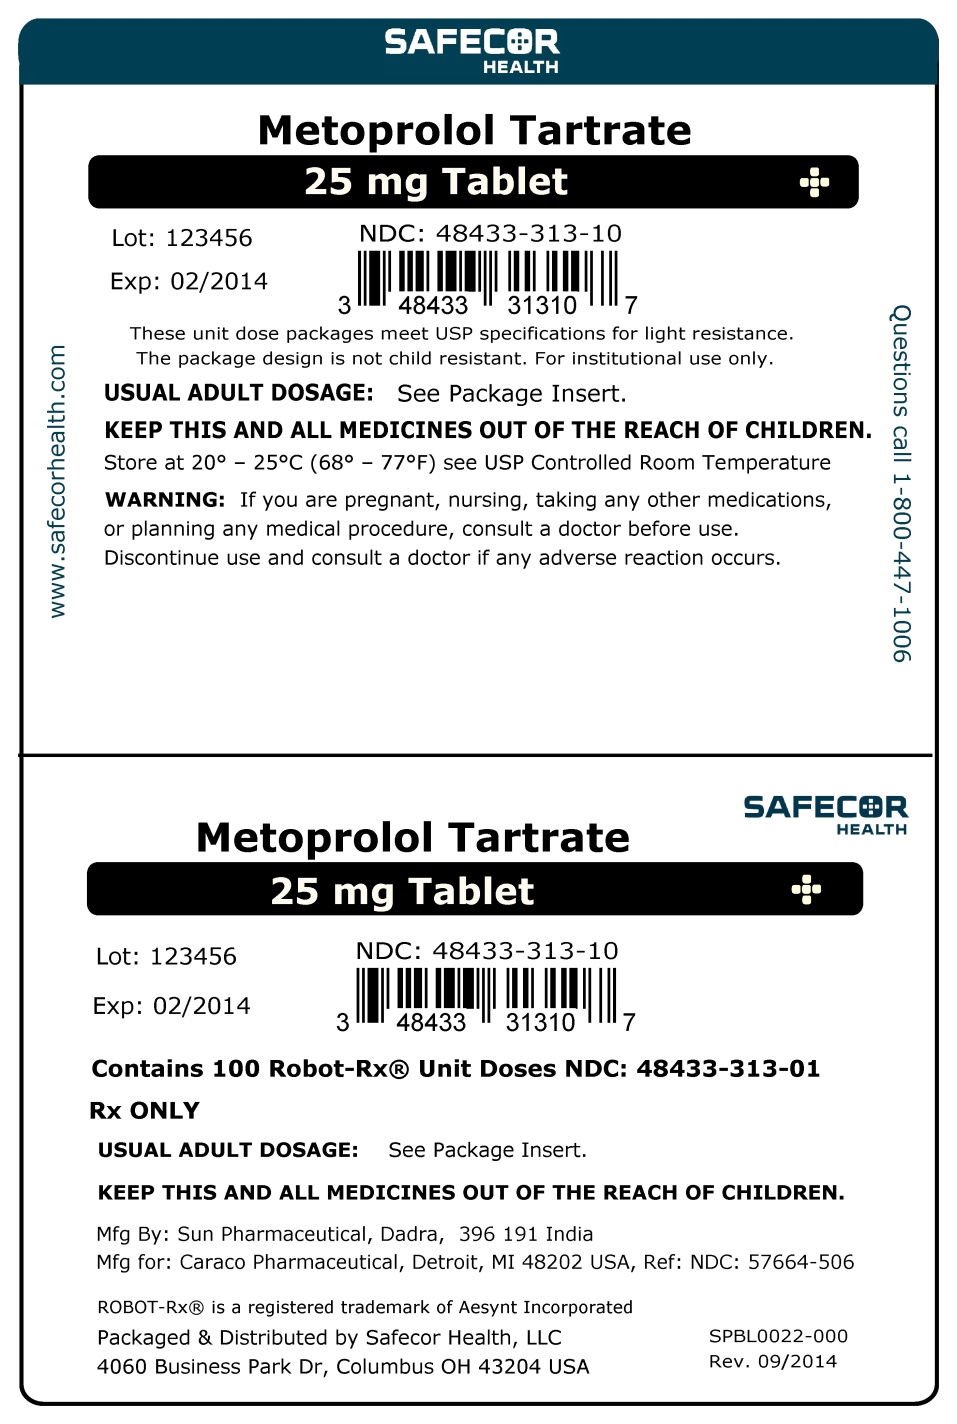 Metoprolol 25 mg Robot Unit Dose Box Label